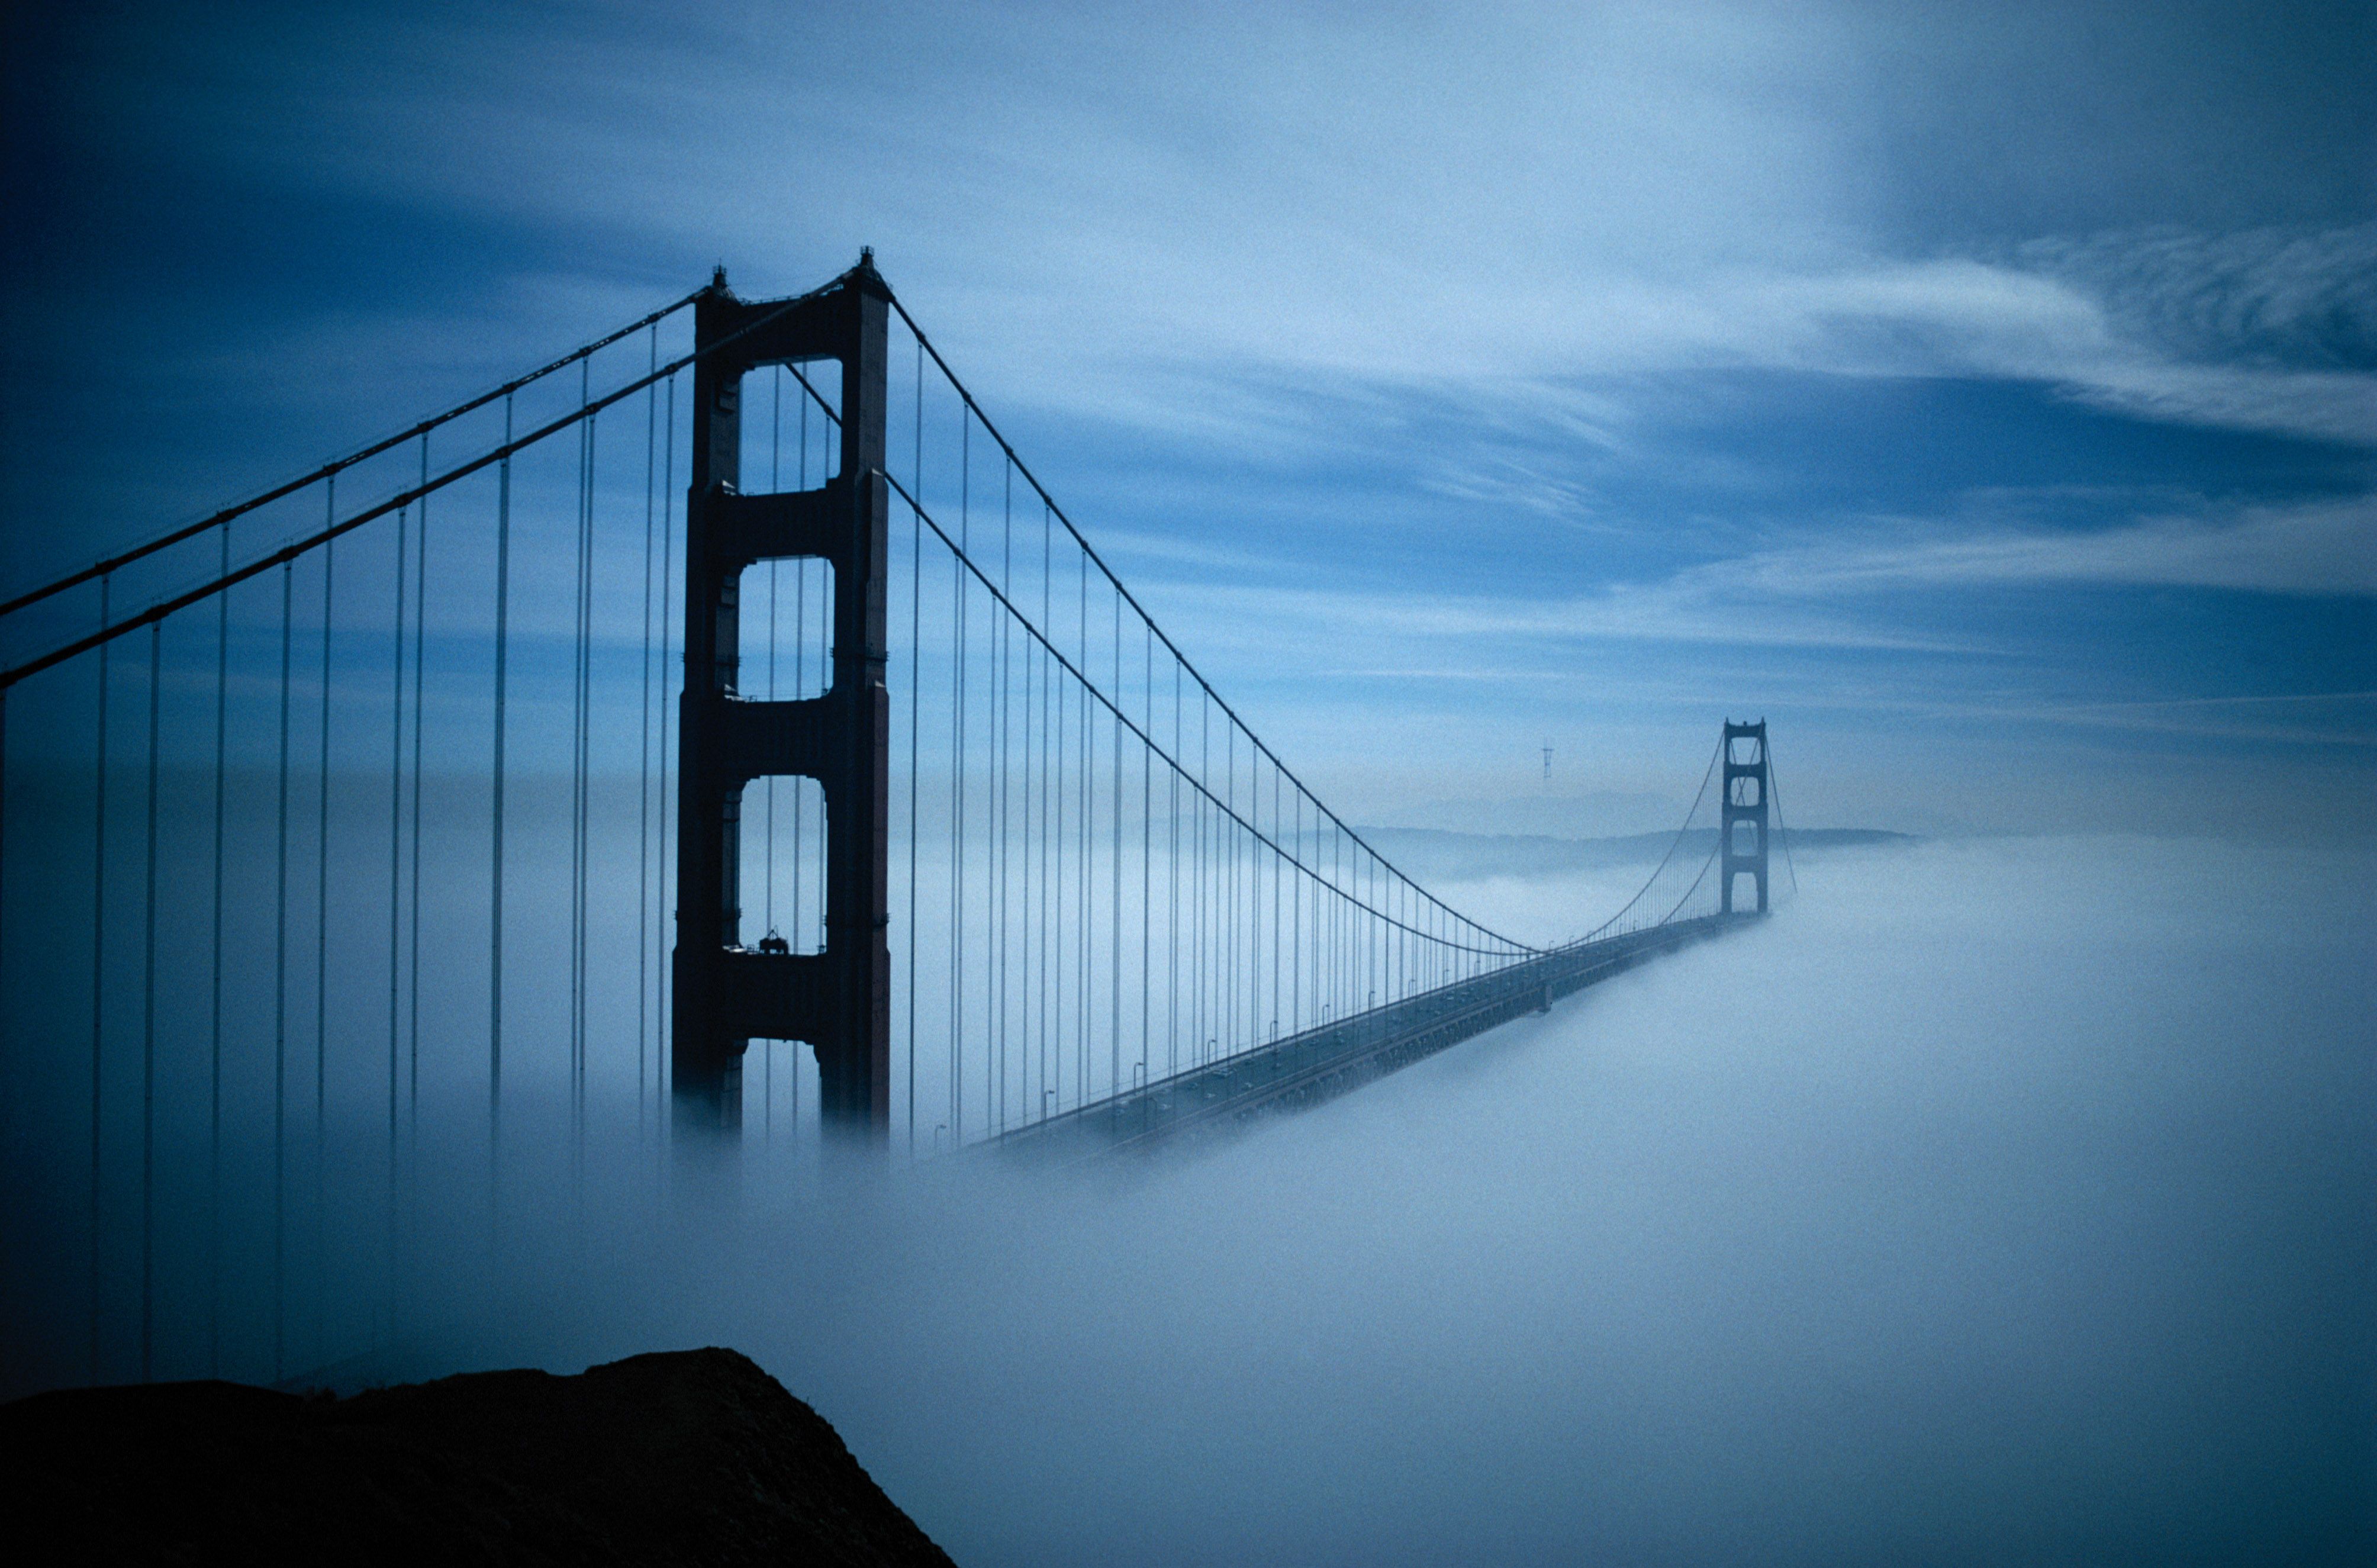 We Love A Romantic Fog Shrouded Golden Gate Bridge Almost As